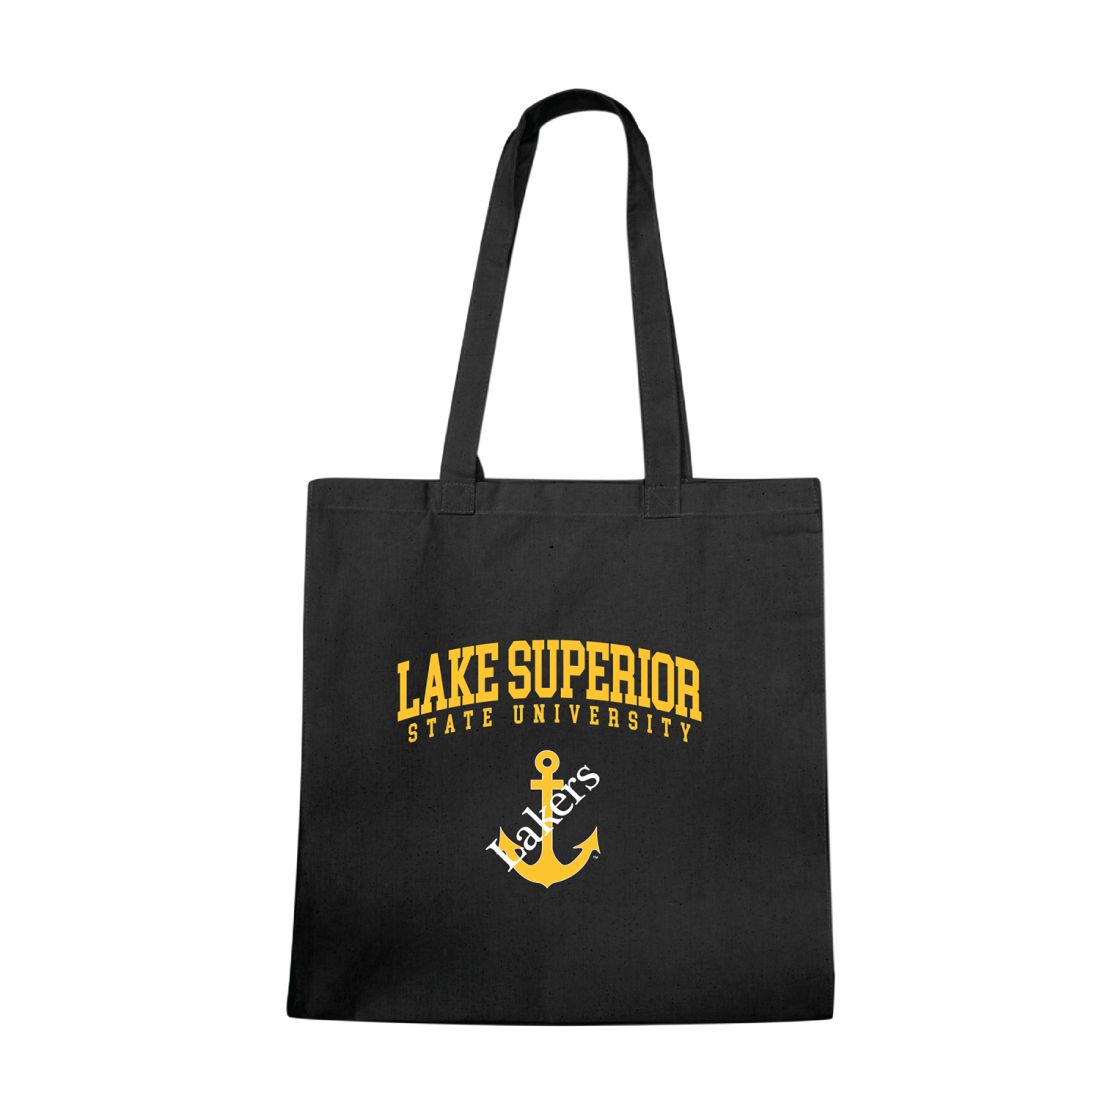 LSSU Lake Superior State University Lakers Institutional Seal Tote Bag